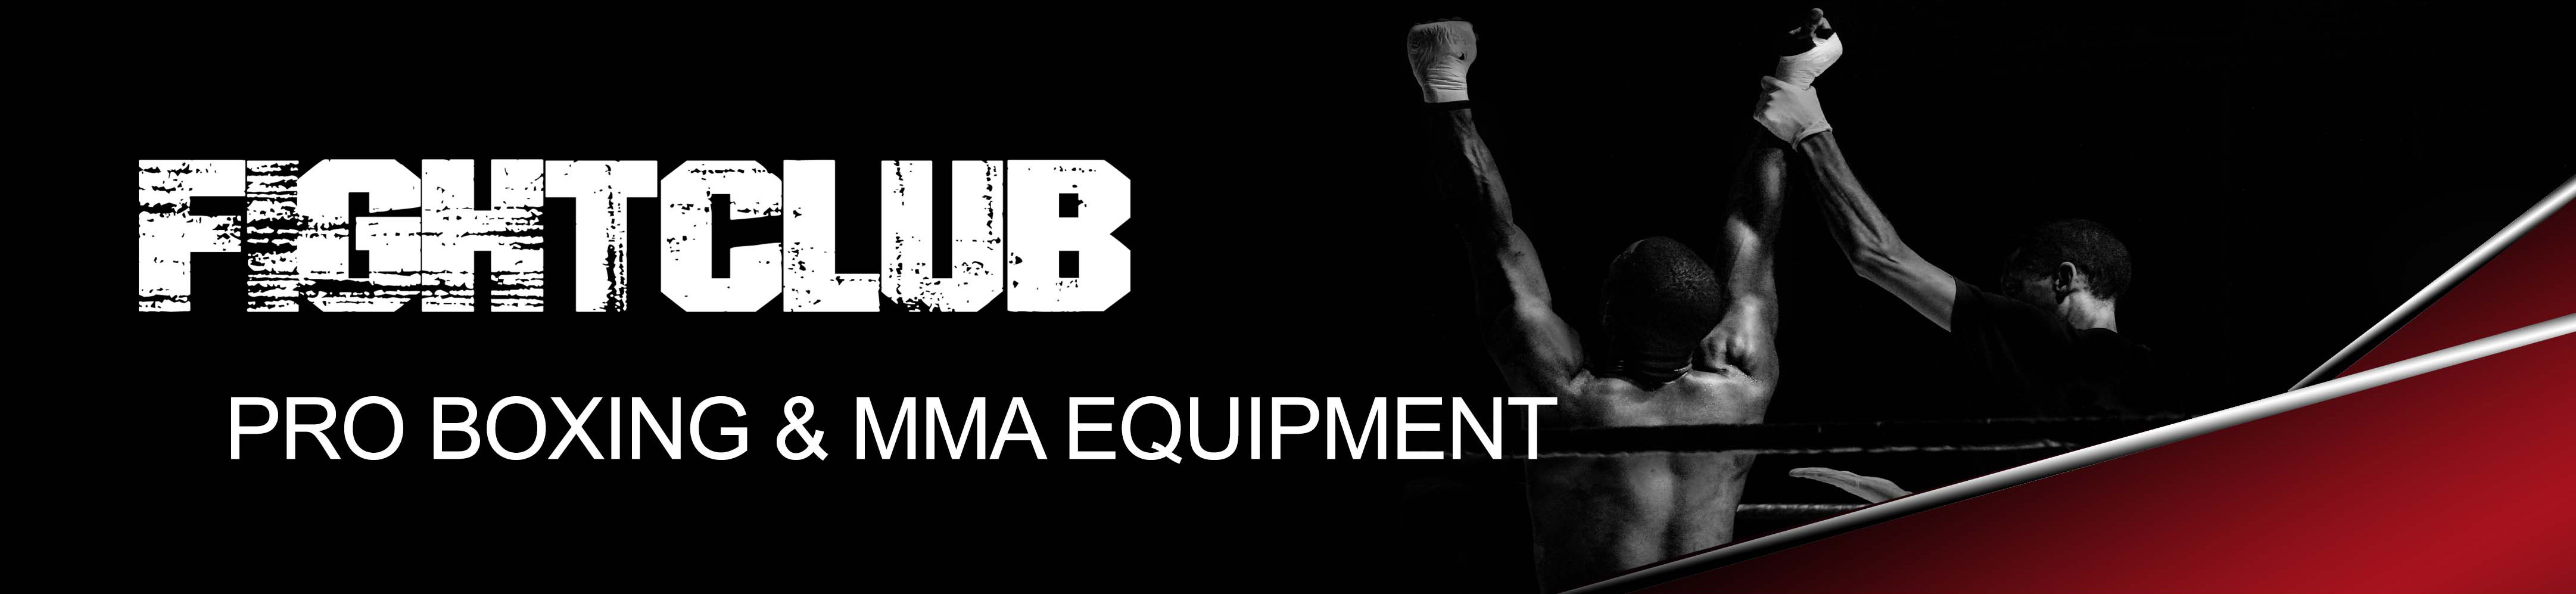 Fight Club Pro Boxing Equipment